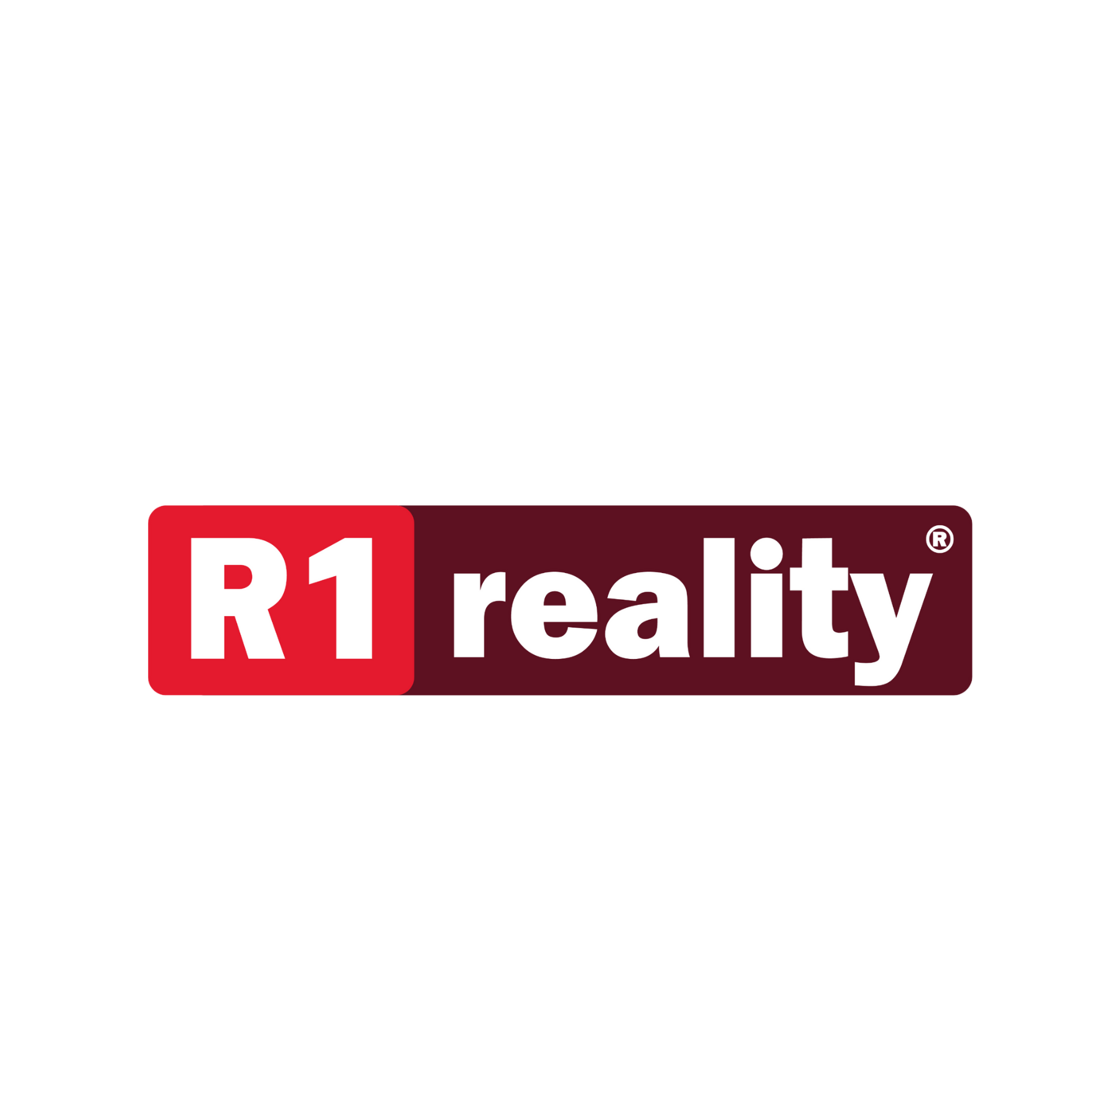 r1reality